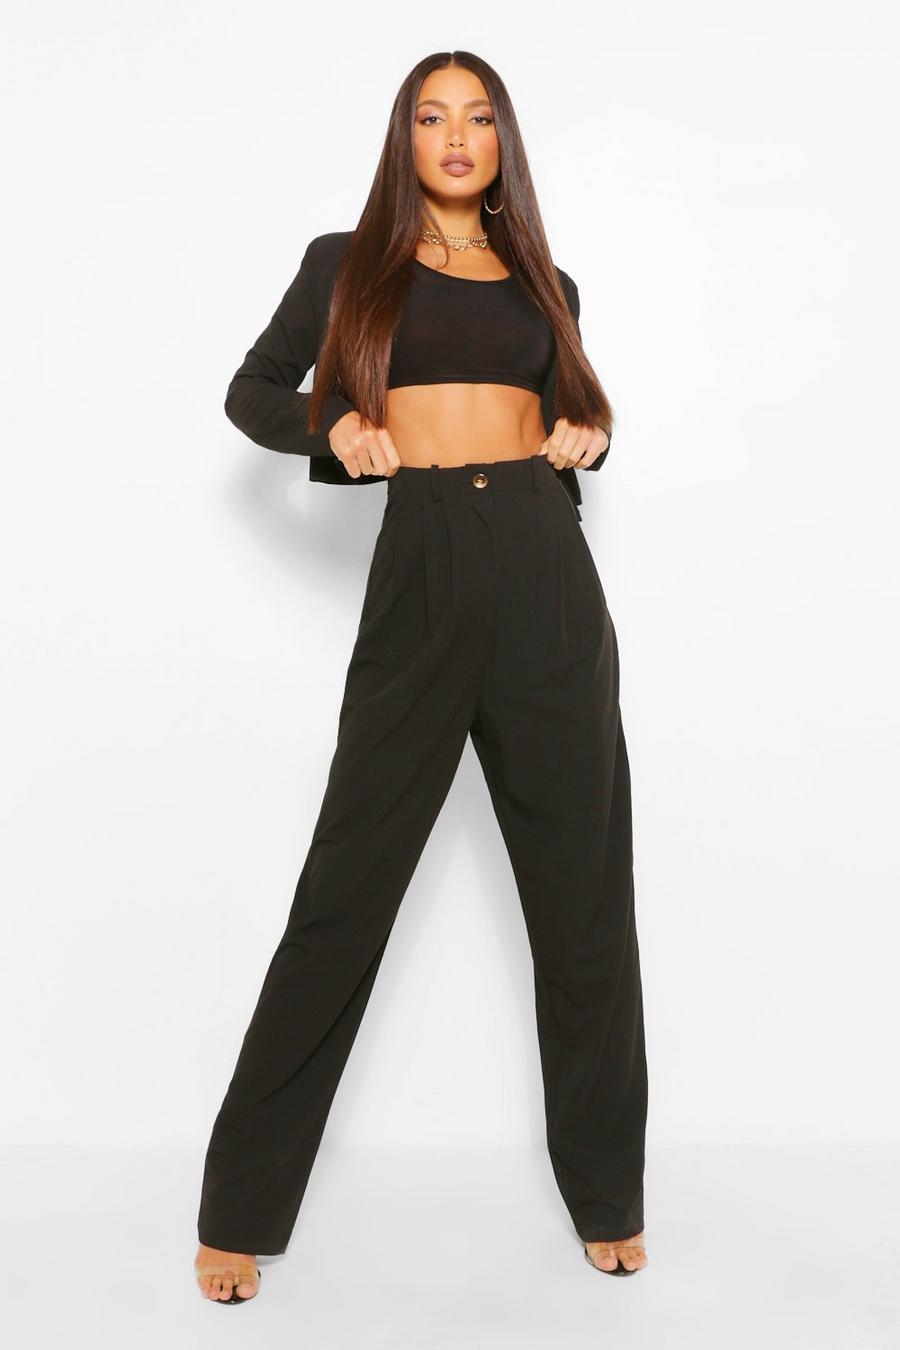 https://media.boohoo.com/i/boohoo/tzz91922_black_xl/female-black-tall-high-waist-woven-trousers/?w=900&qlt=default&fmt.jp2.qlt=70&fmt=auto&sm=fit